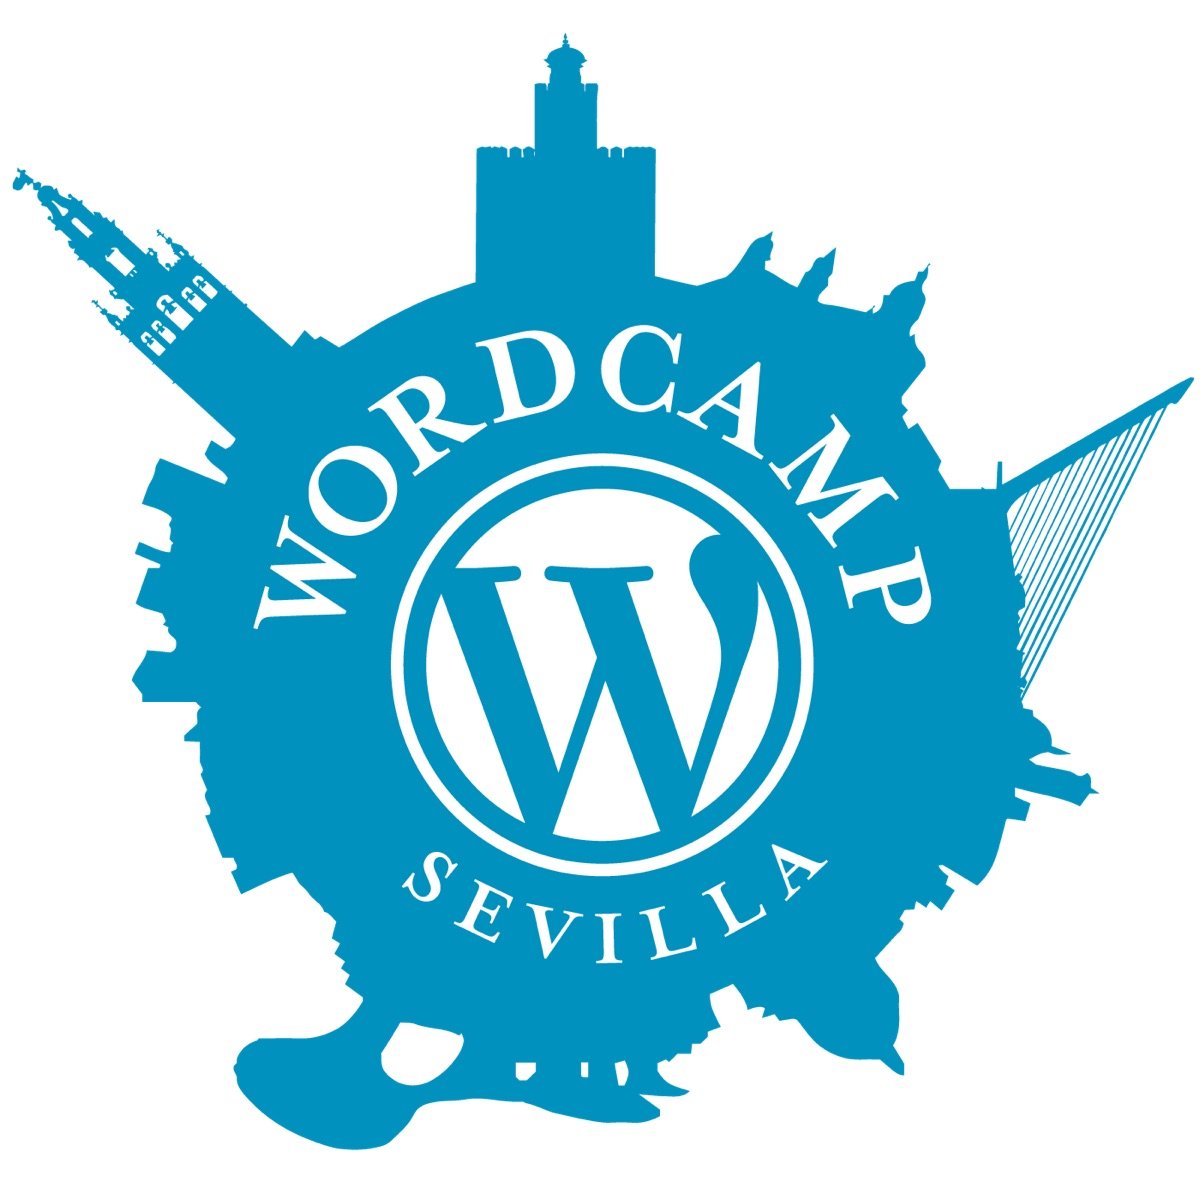 WordCamp Sevilla 2021